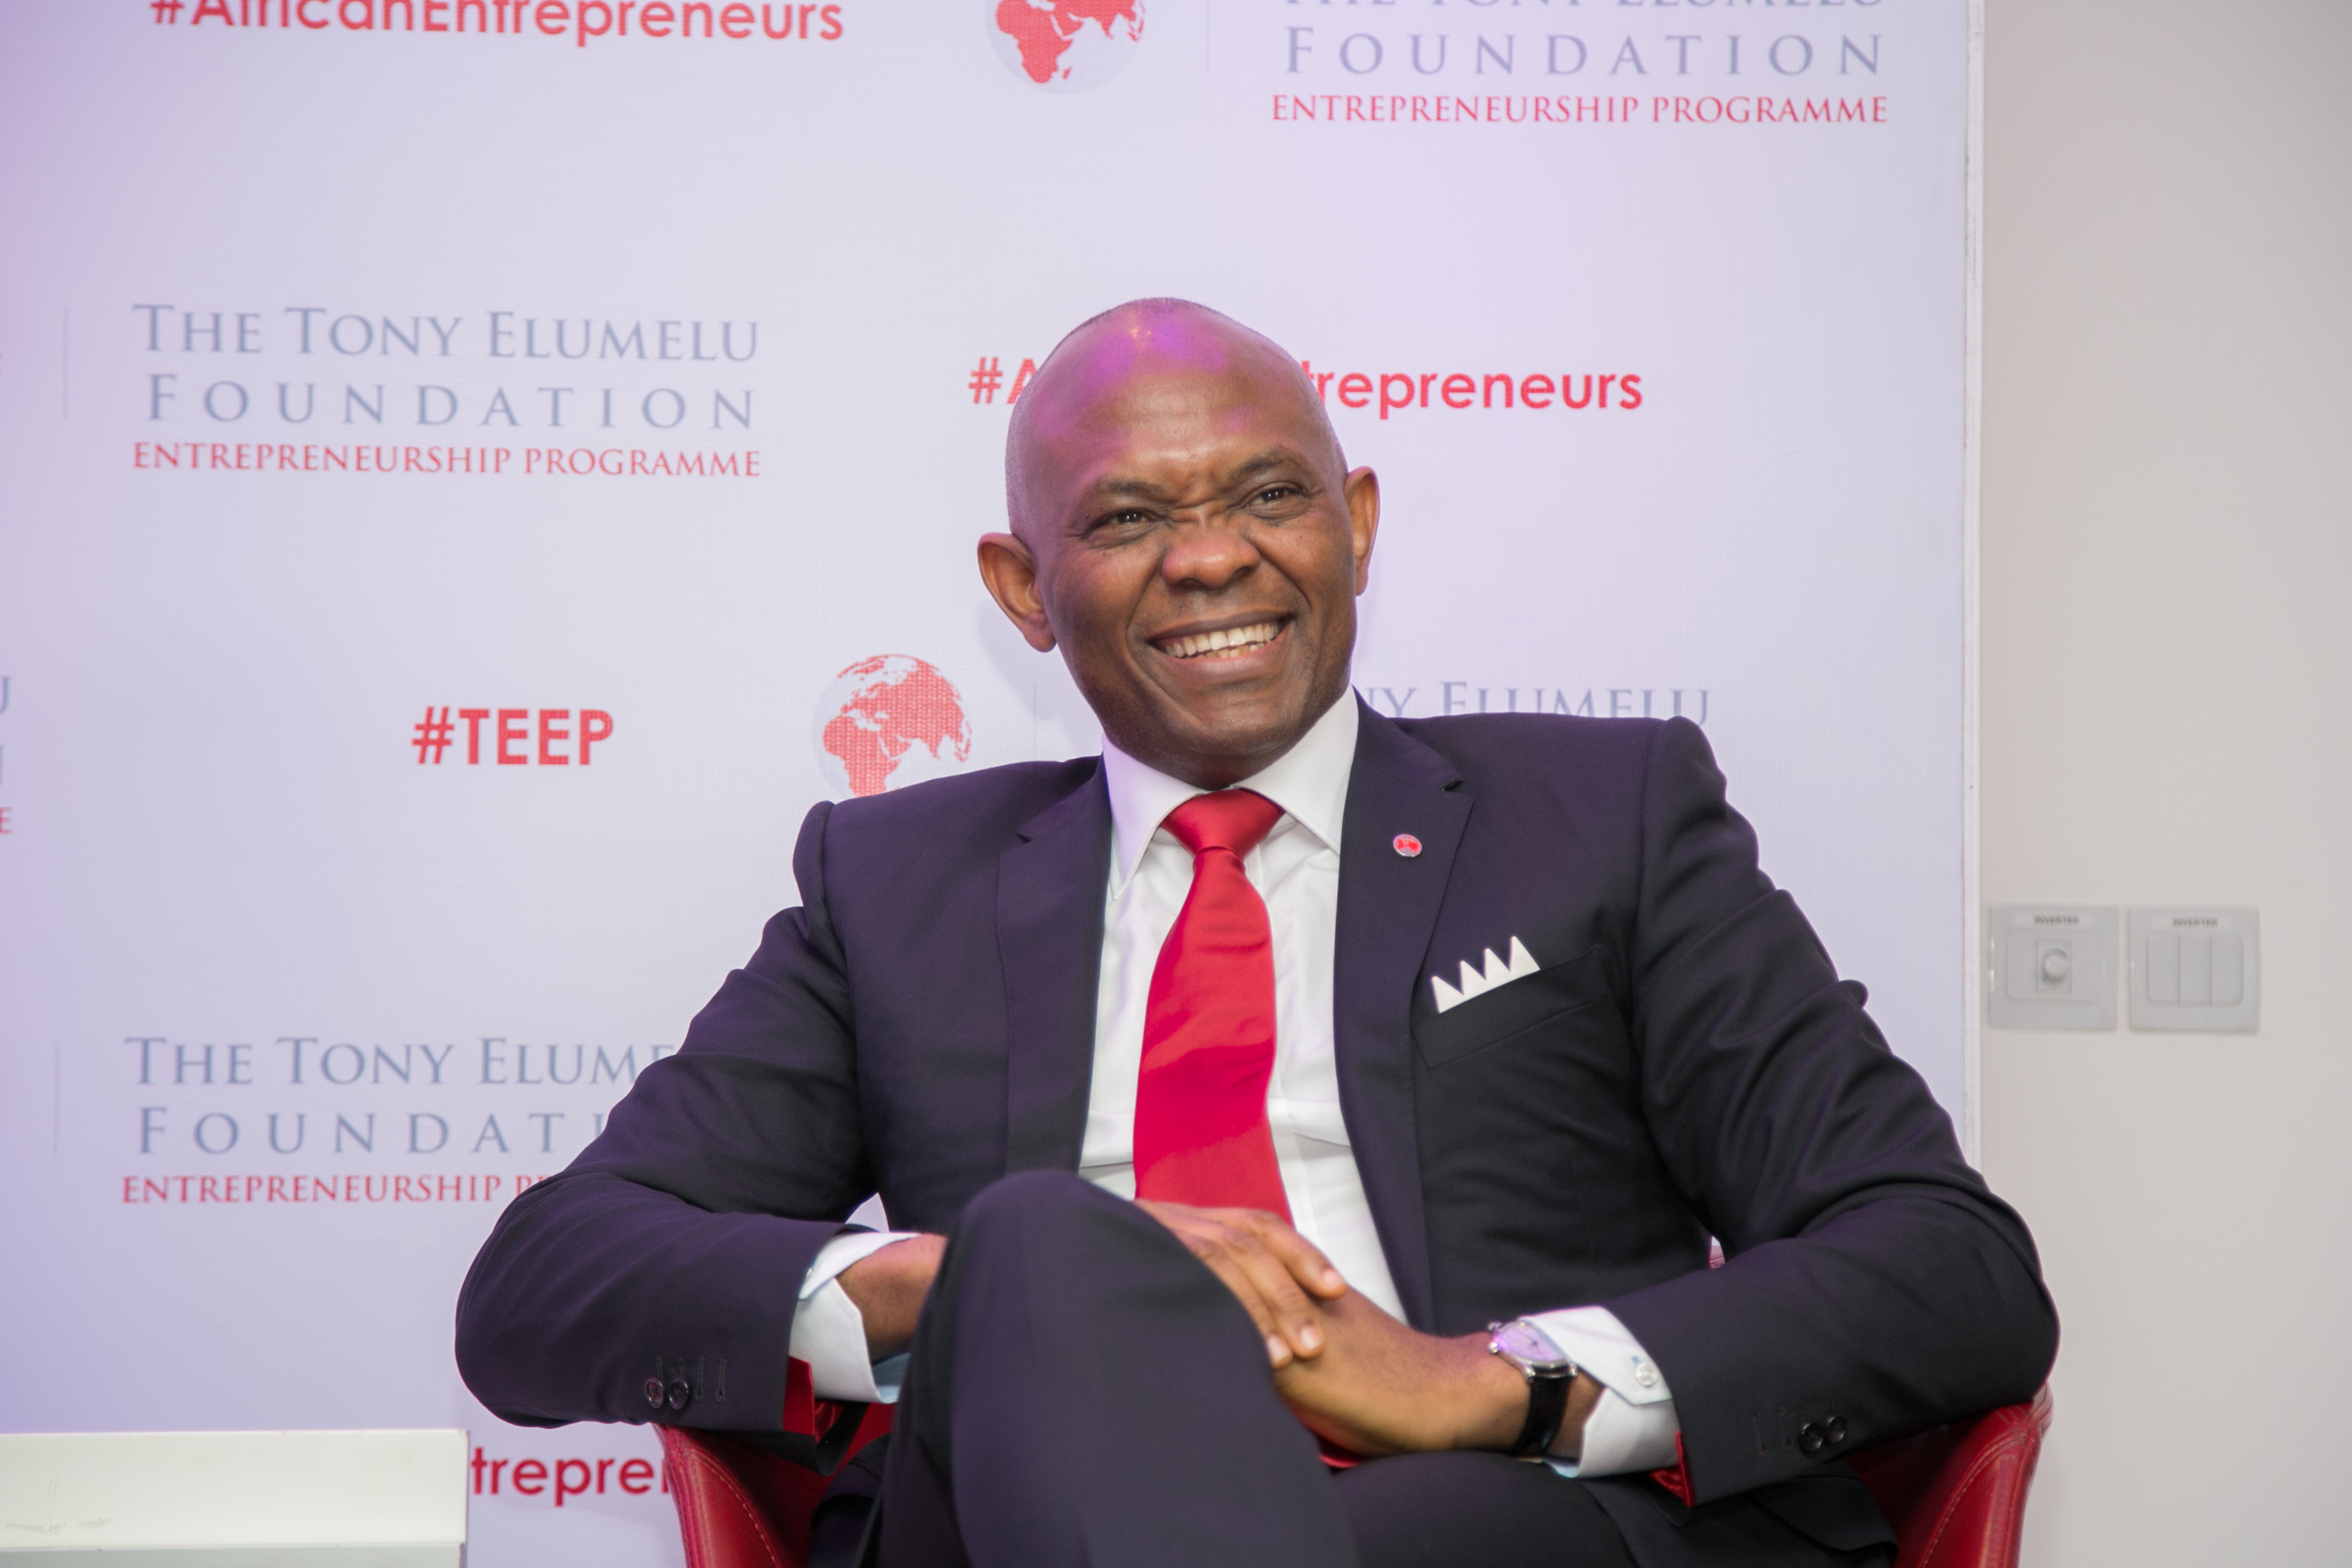 Philanthropist Tony Elumelu to invest $100 million in 10,000 African entrepreneurs